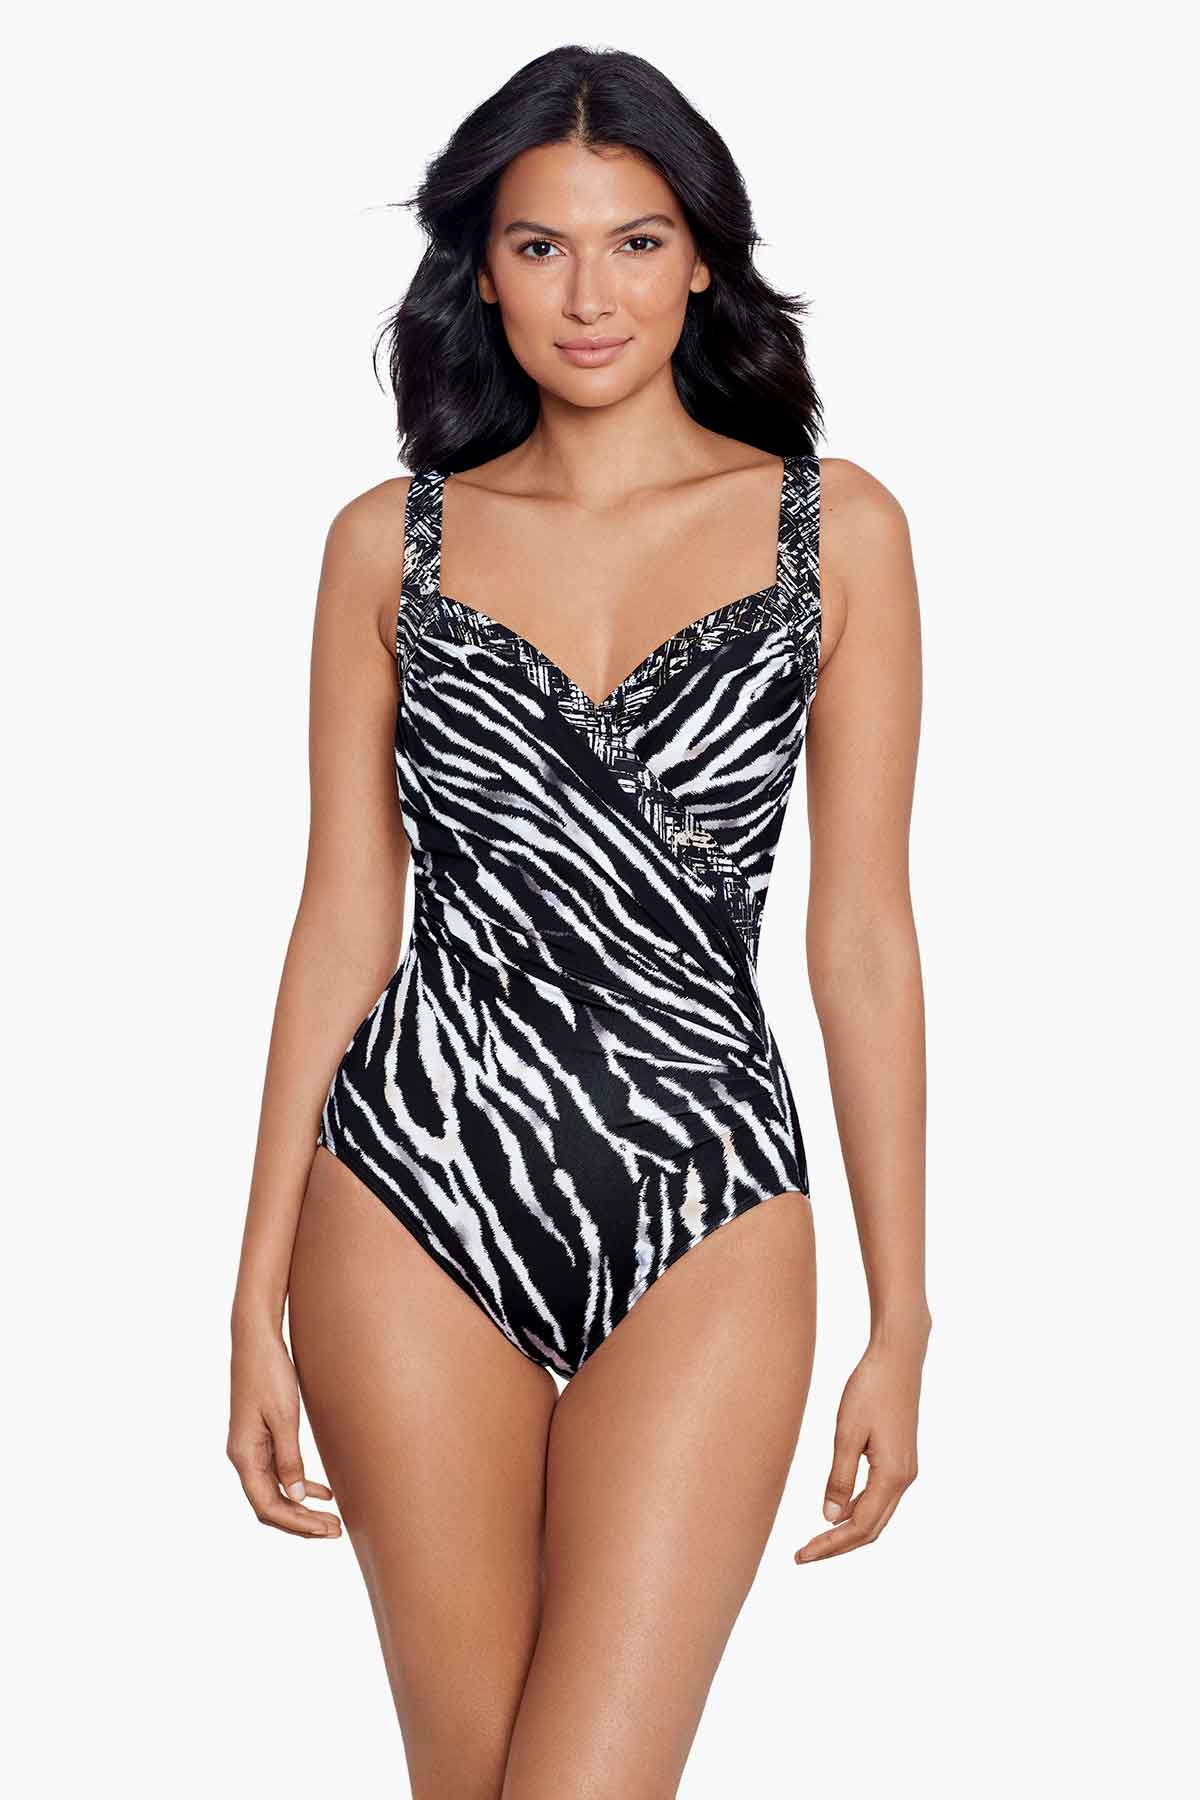 Wholesale women tiger bodysuit Trendy One-Piece Suits, Rompers